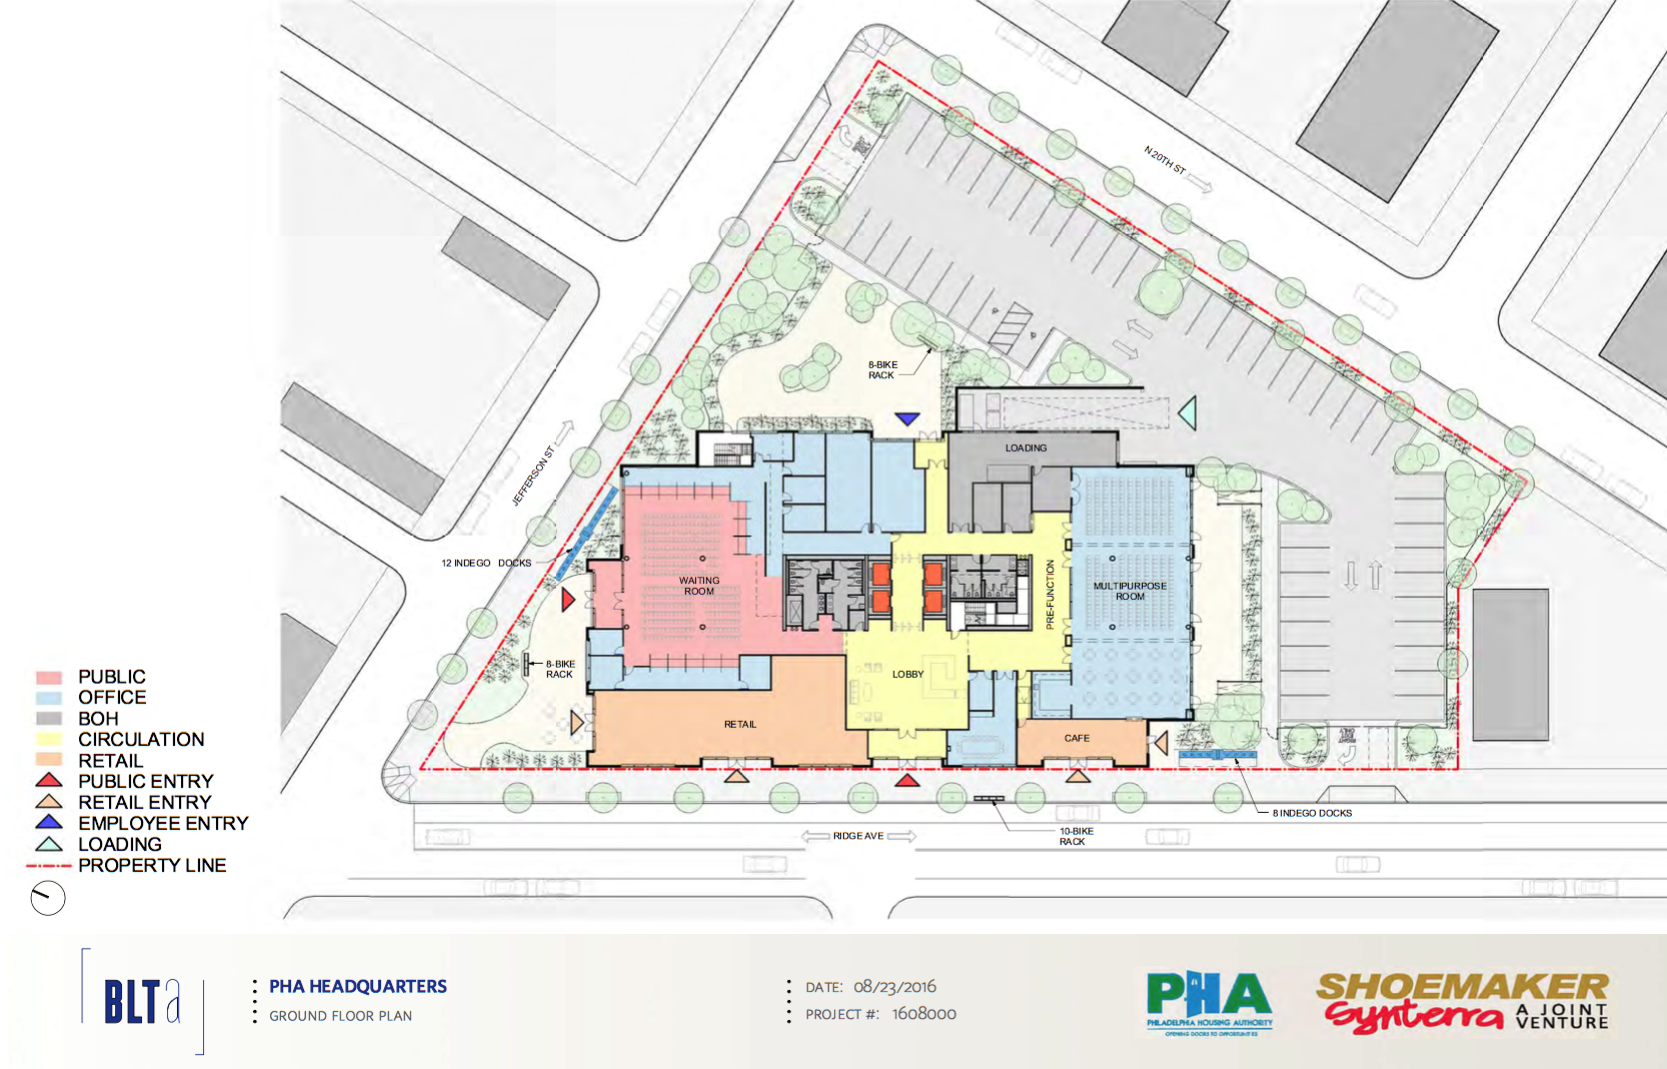 PHA Headquarters: Ground floor and site plan | BLTa, CDR presentation, Sept. 2016